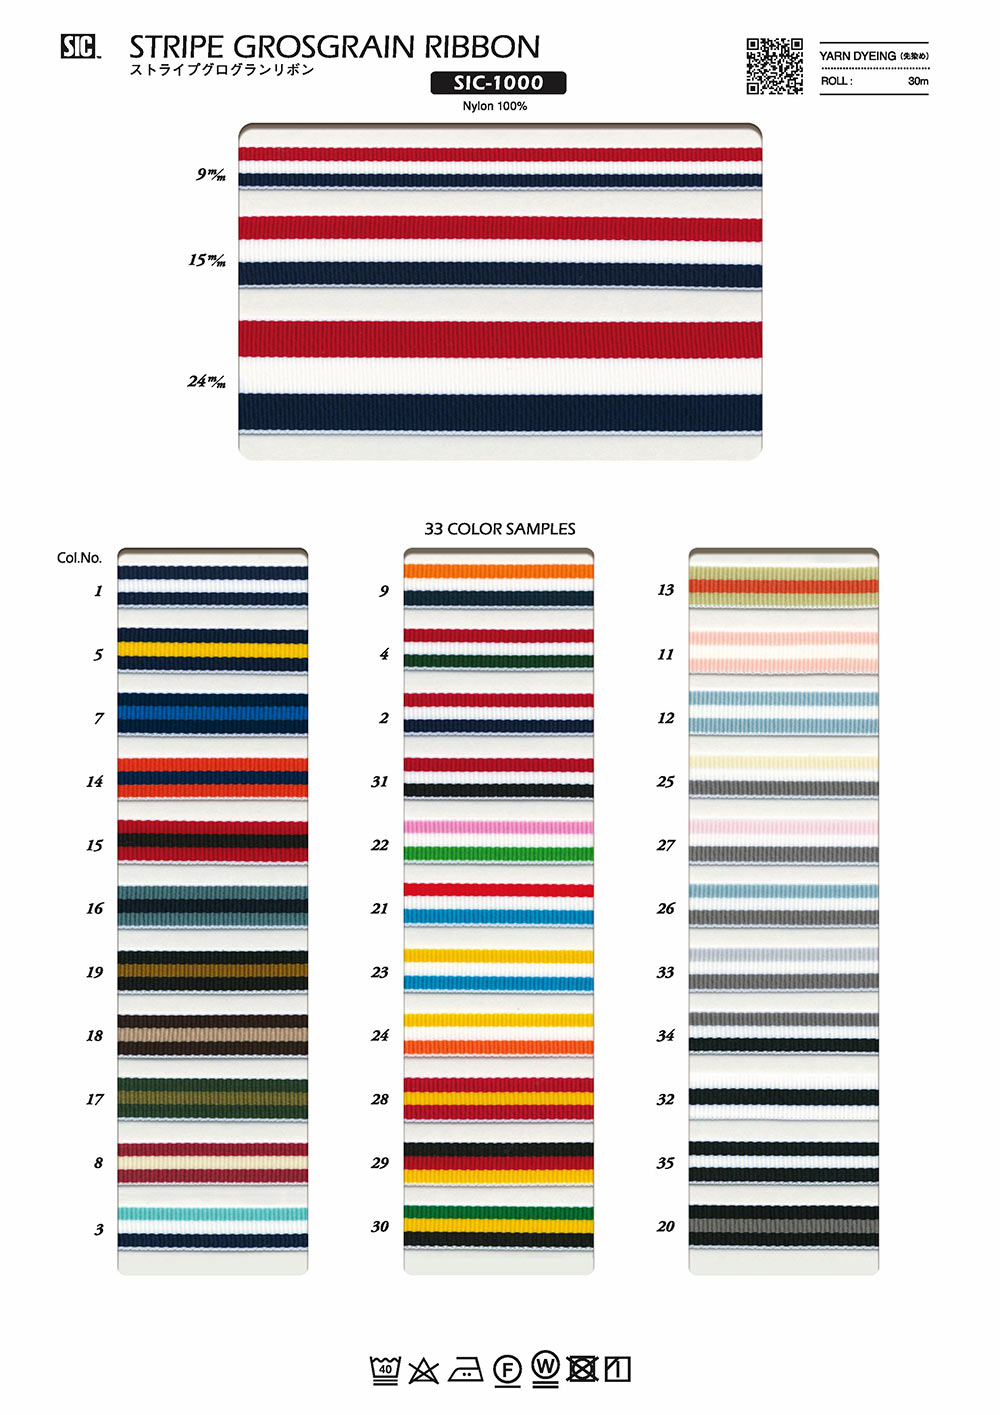 SIC-1000 Striped Grosgrain Ribbon[Ribbon Tape Cord] SHINDO(SIC)